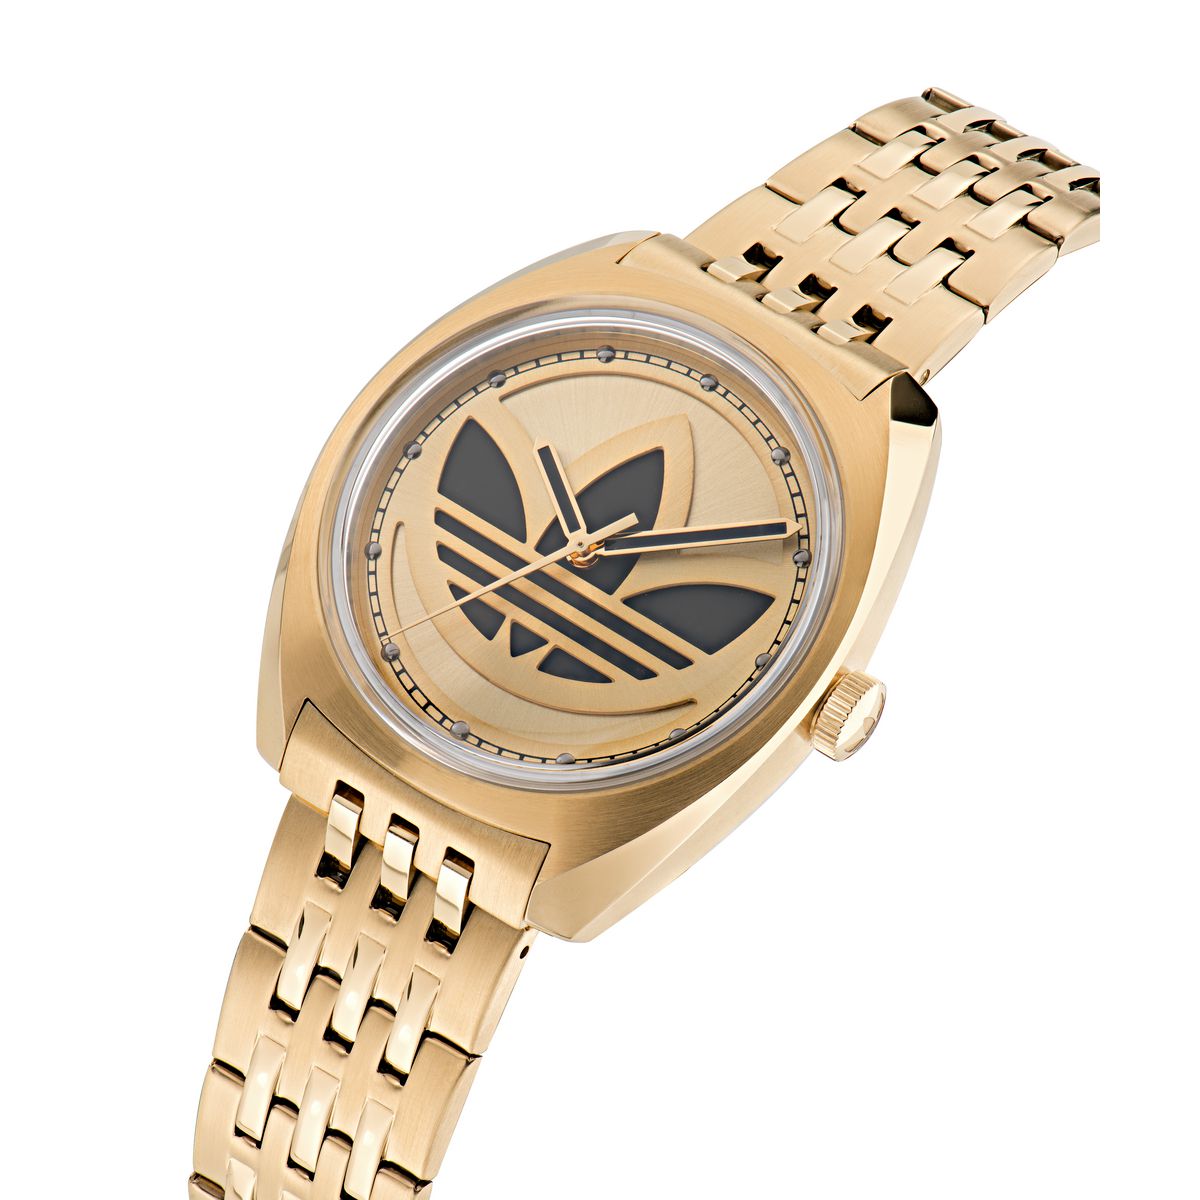 Adidas Originals Gold-Tone Dial Unisex Analog Watch - AOFH23509